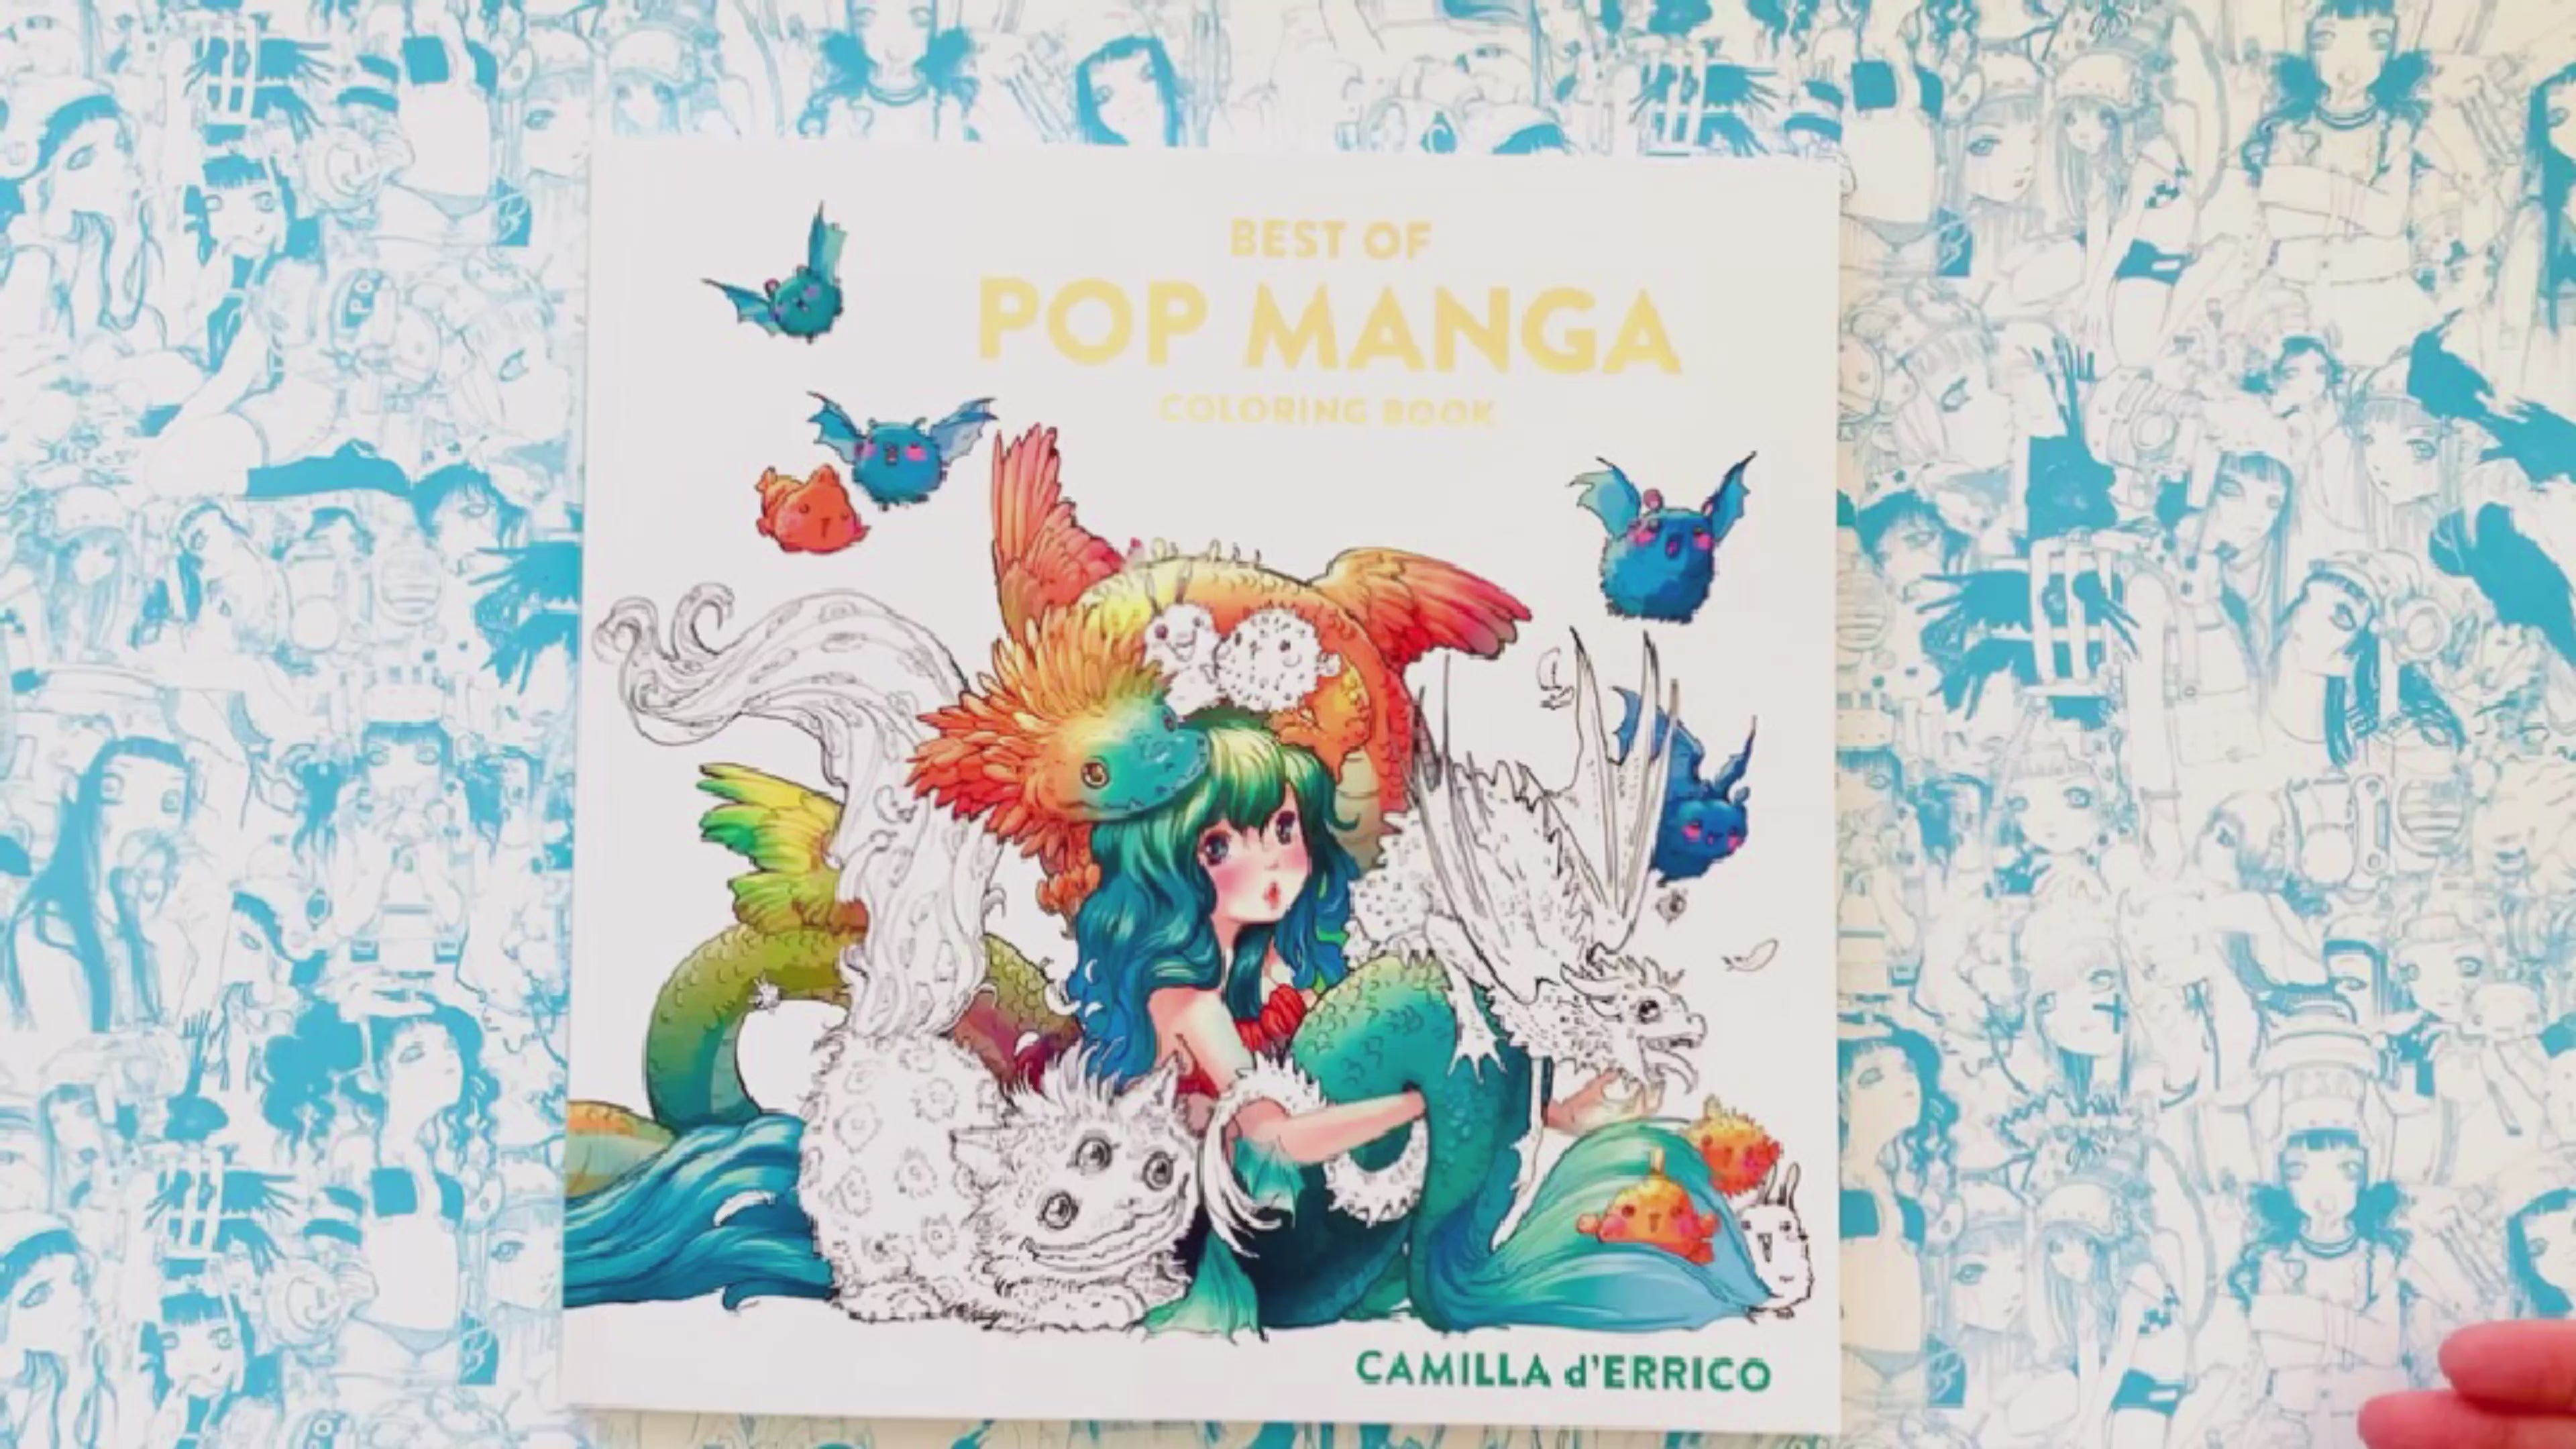 Best of Pop Manga Coloring Book